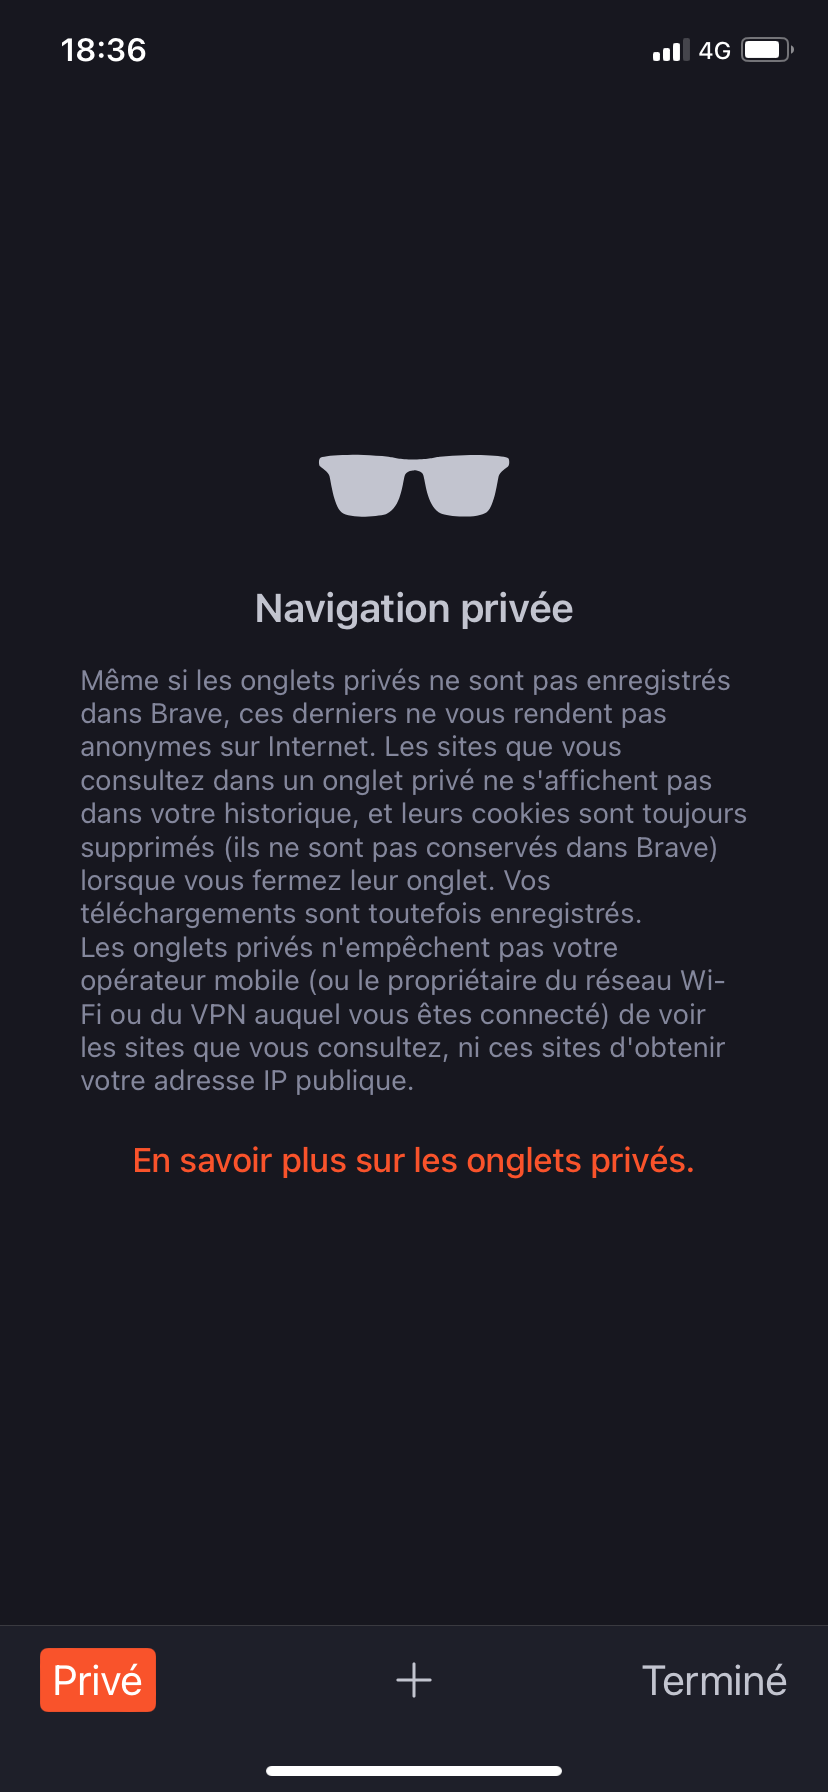 Brave navigation privée mobile 3